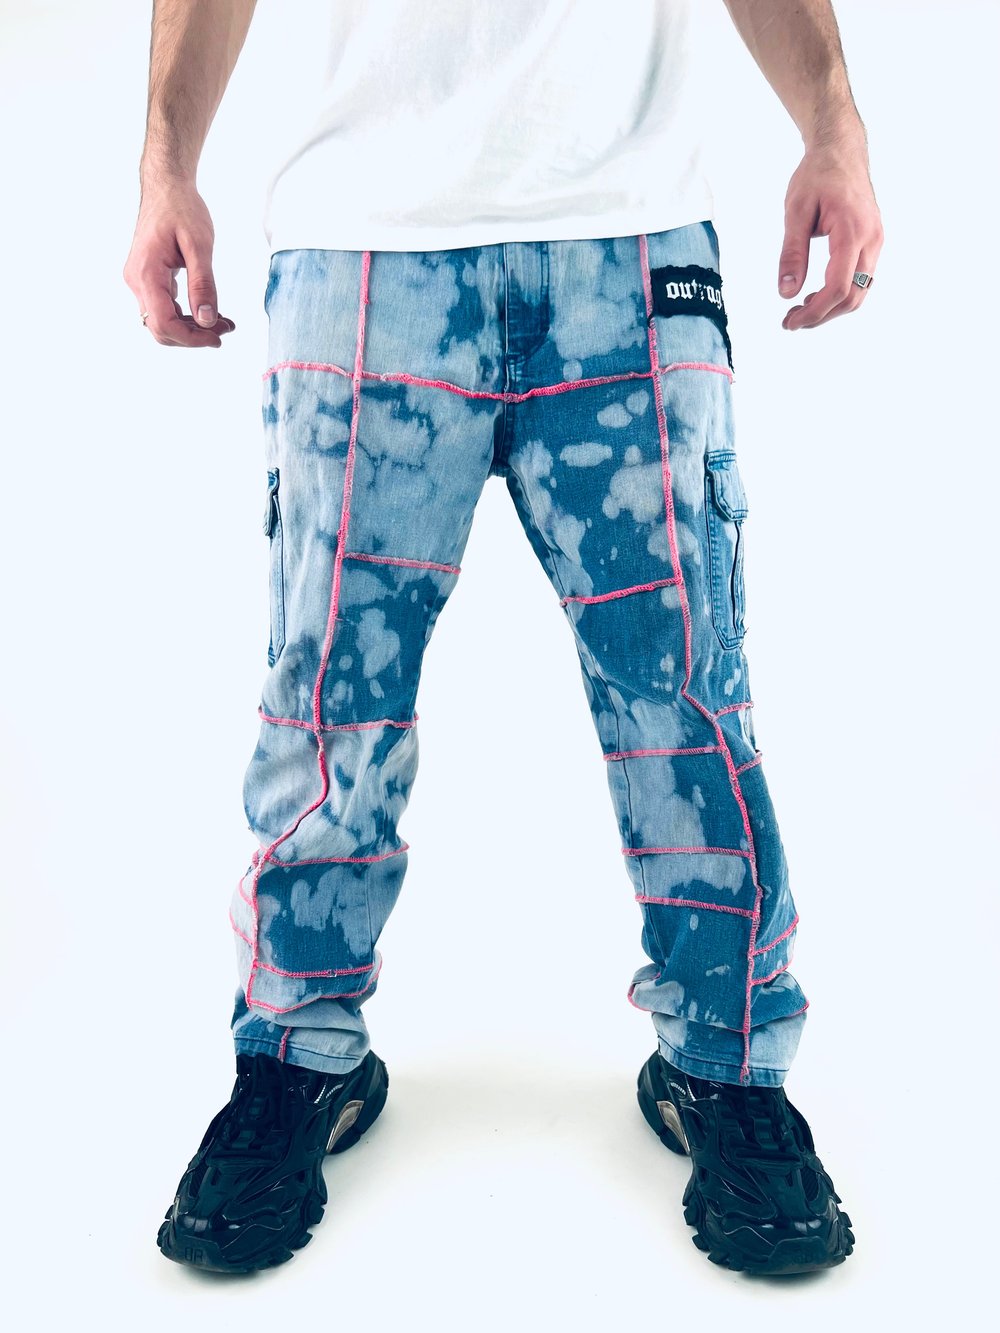 Pink neon pants